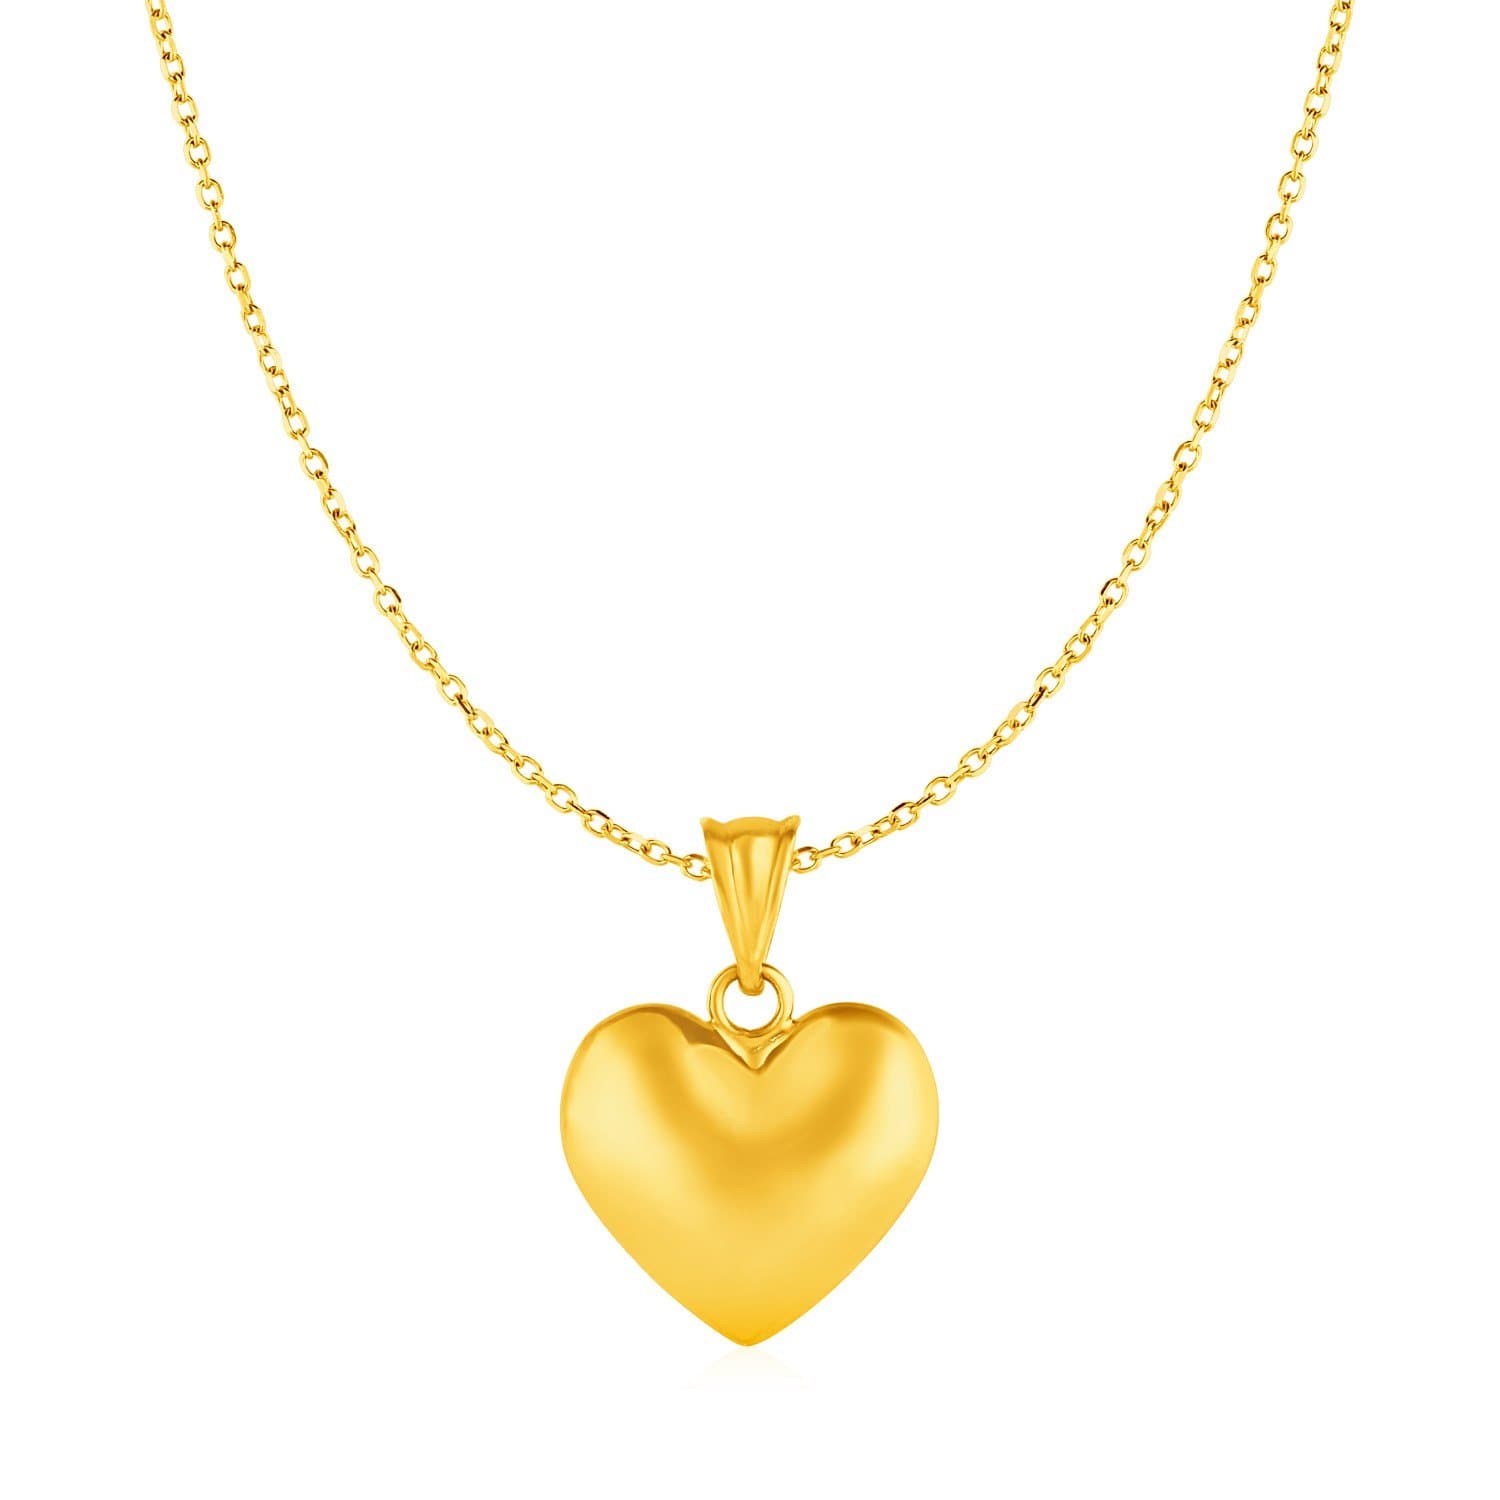 Puffed Heart Pendant in 10k Yellow Gold